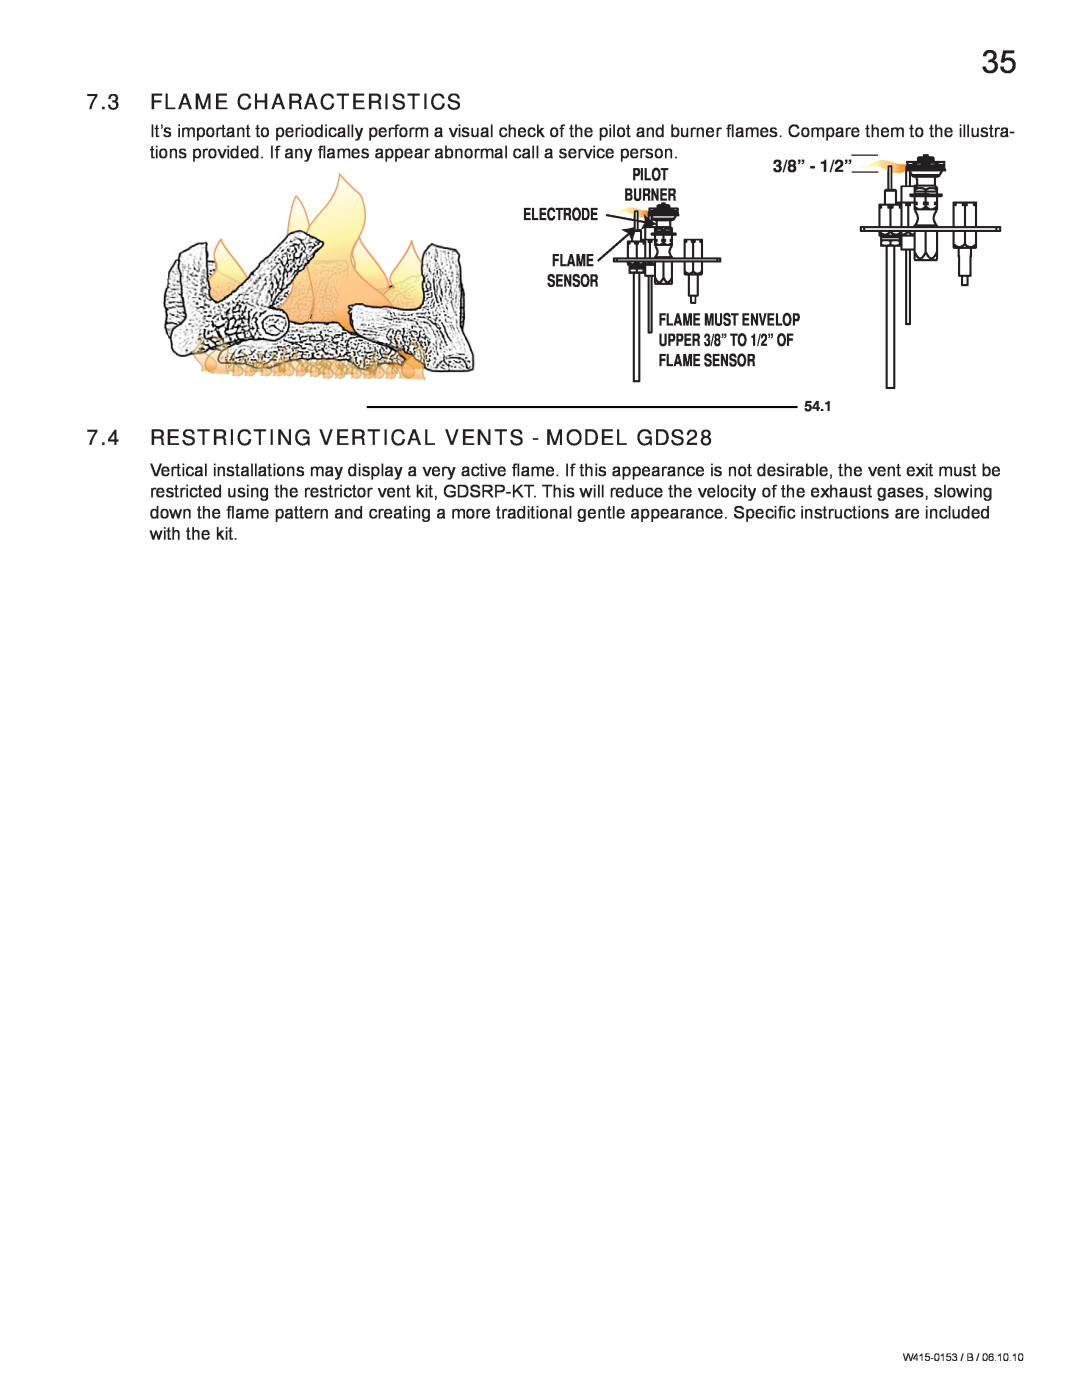 Napoleon Fireplaces GDS28P manual 7.3FLAME CHARACTERISTICS, 7.4RESTRICTING VERTICAL VENTS - MODEL GDS28, Flame Sensor 